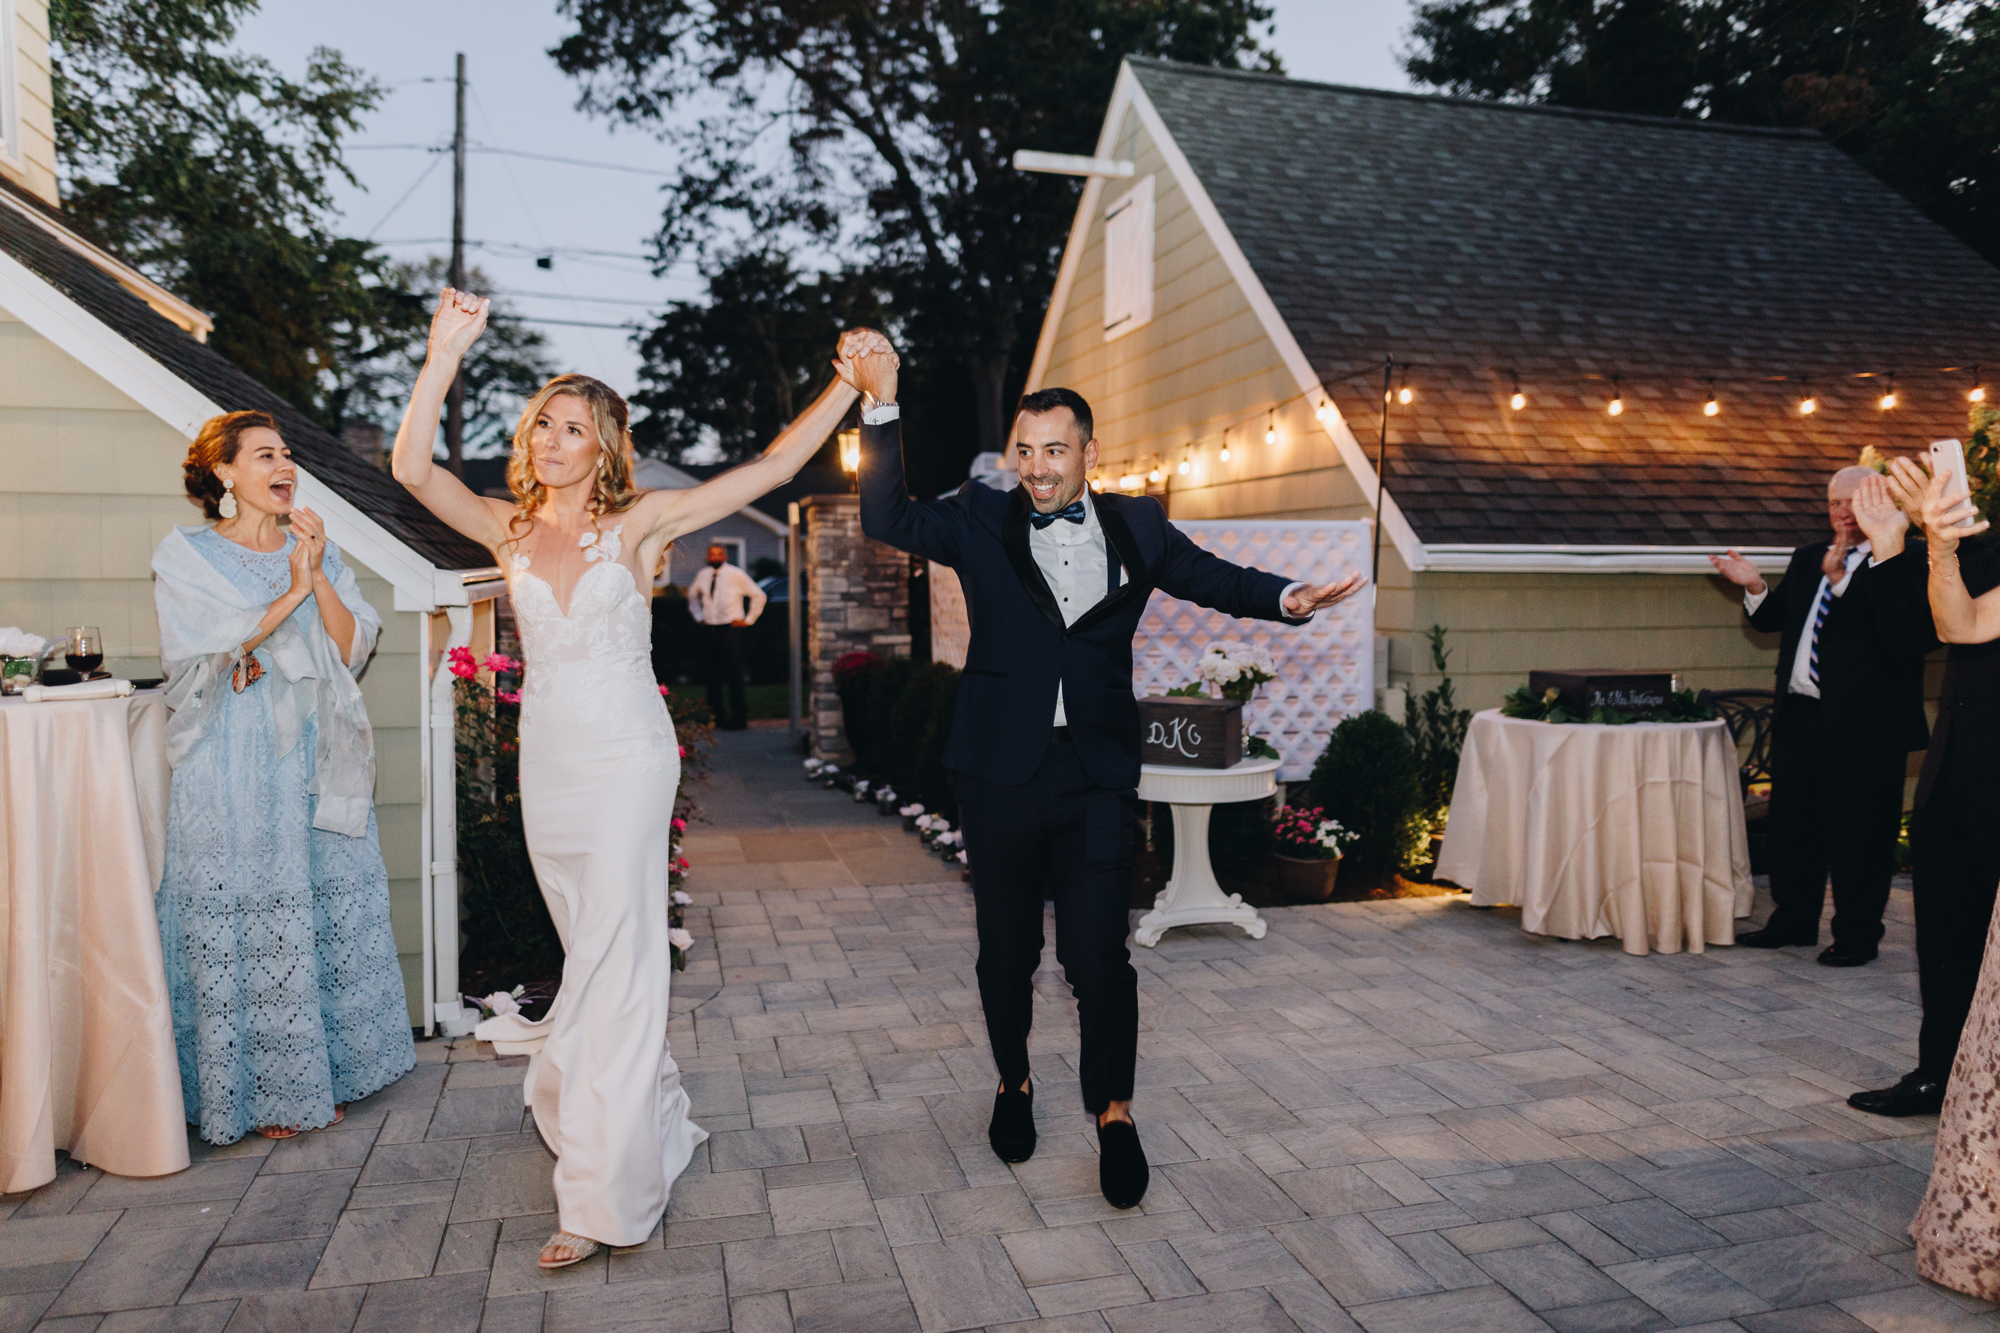 Backyard wedding reception on Long Island with fairy lights